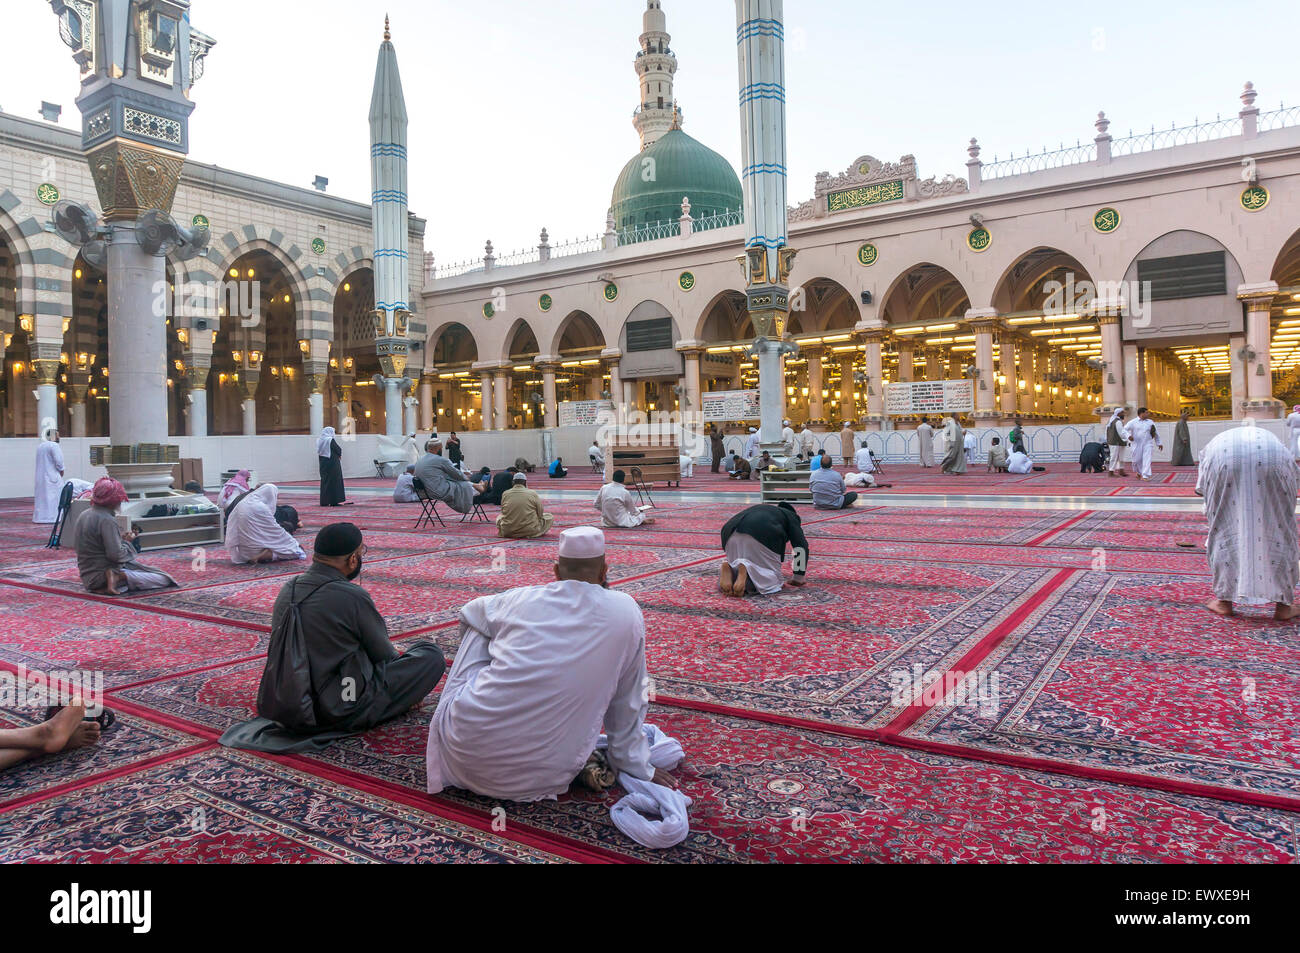 MEDINA, SAUDI ARABIA - MARCH 09, 2015 : Muslims read Quran and pray inside Nabawi mosque. Stock Photo